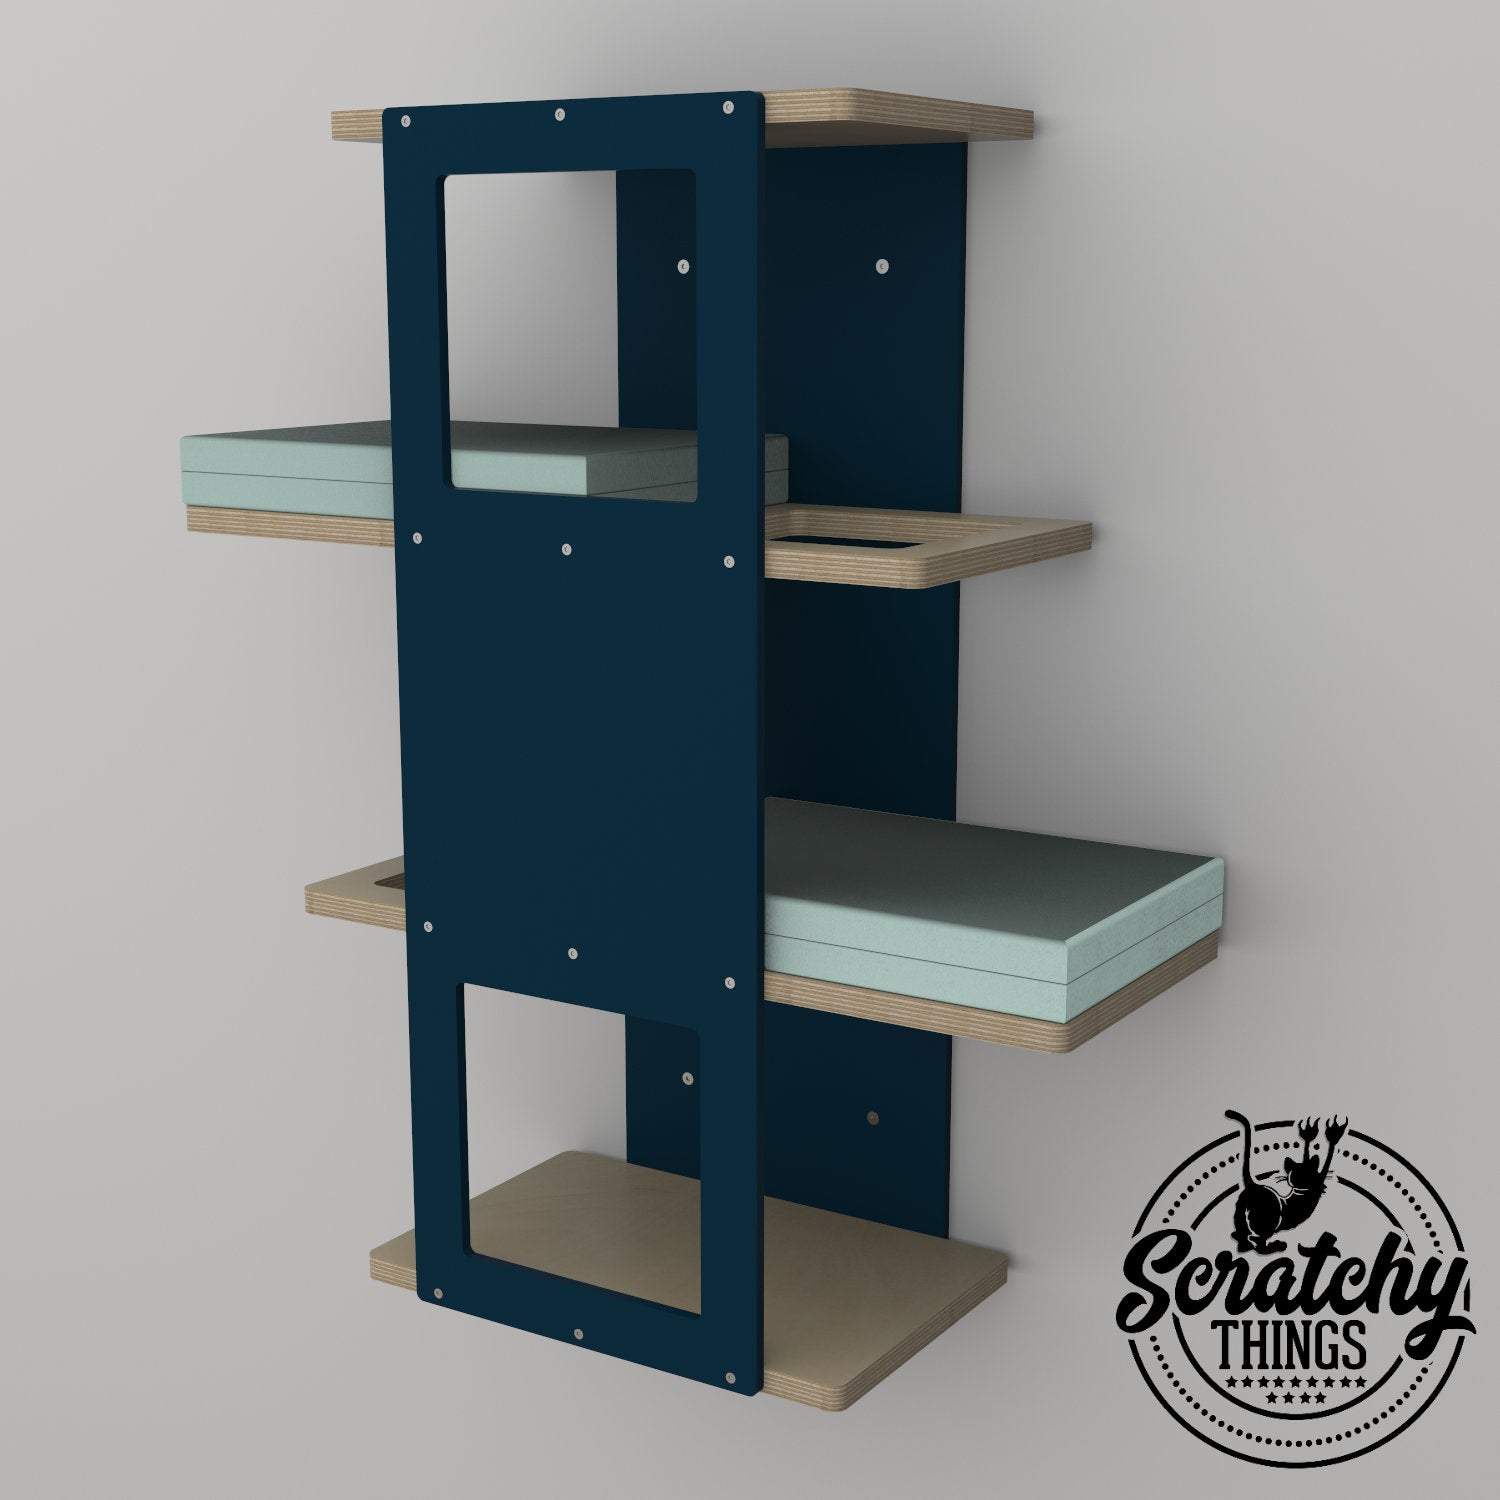 Cat Wall Shelf Step Bed Bundle - Wally Stacker Bundle - Scratchy Things Premium Pet Furniture